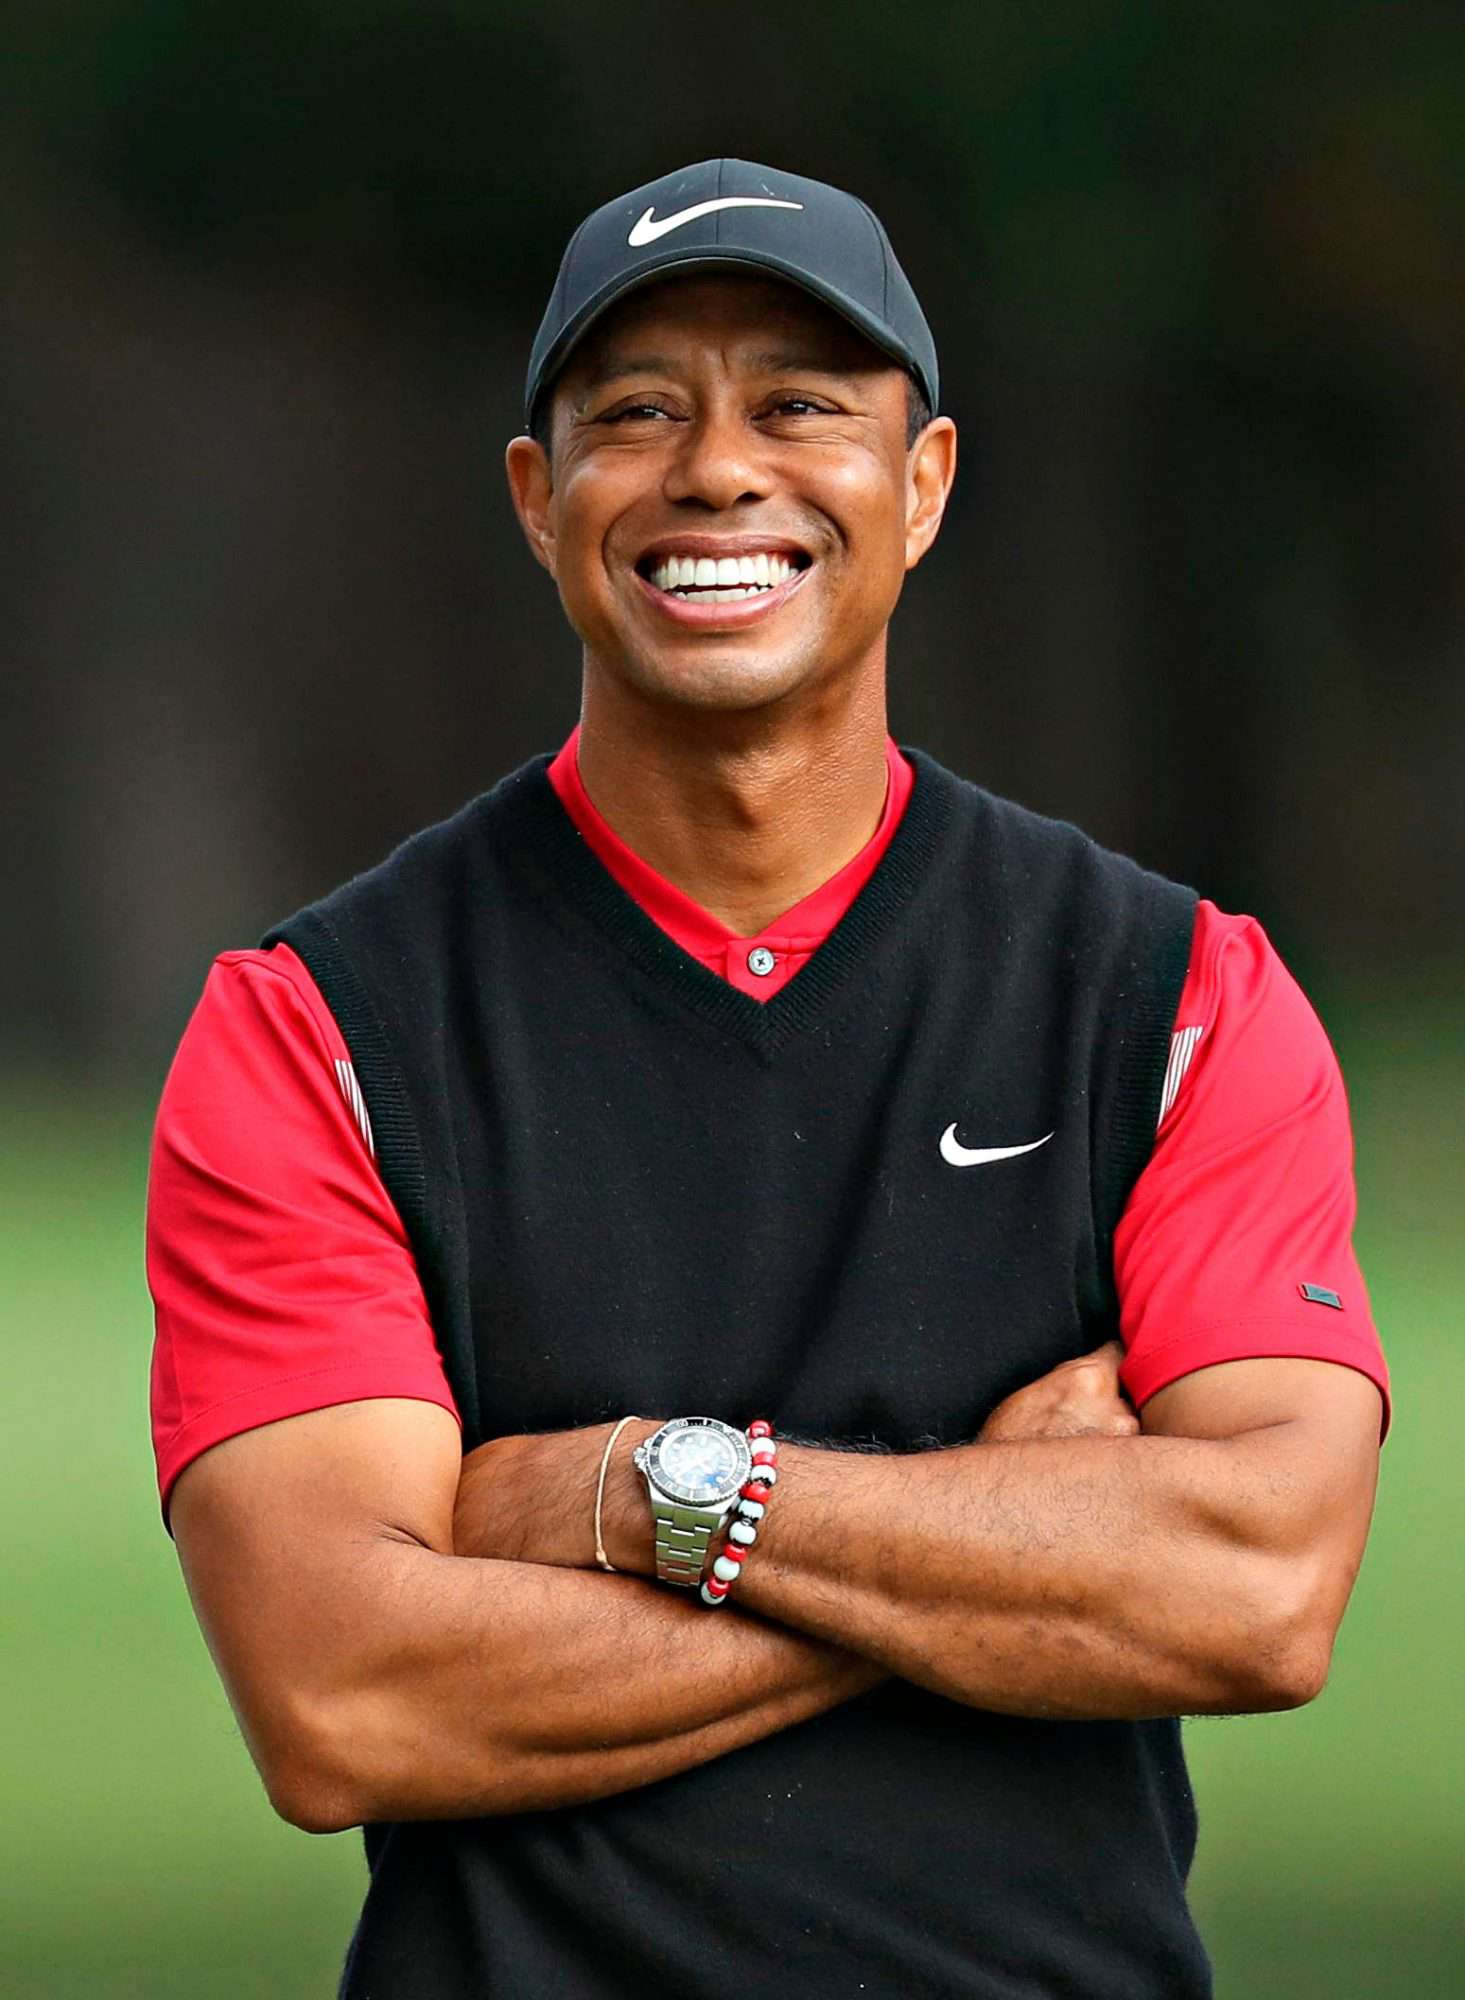 Tiger Woods is not dead